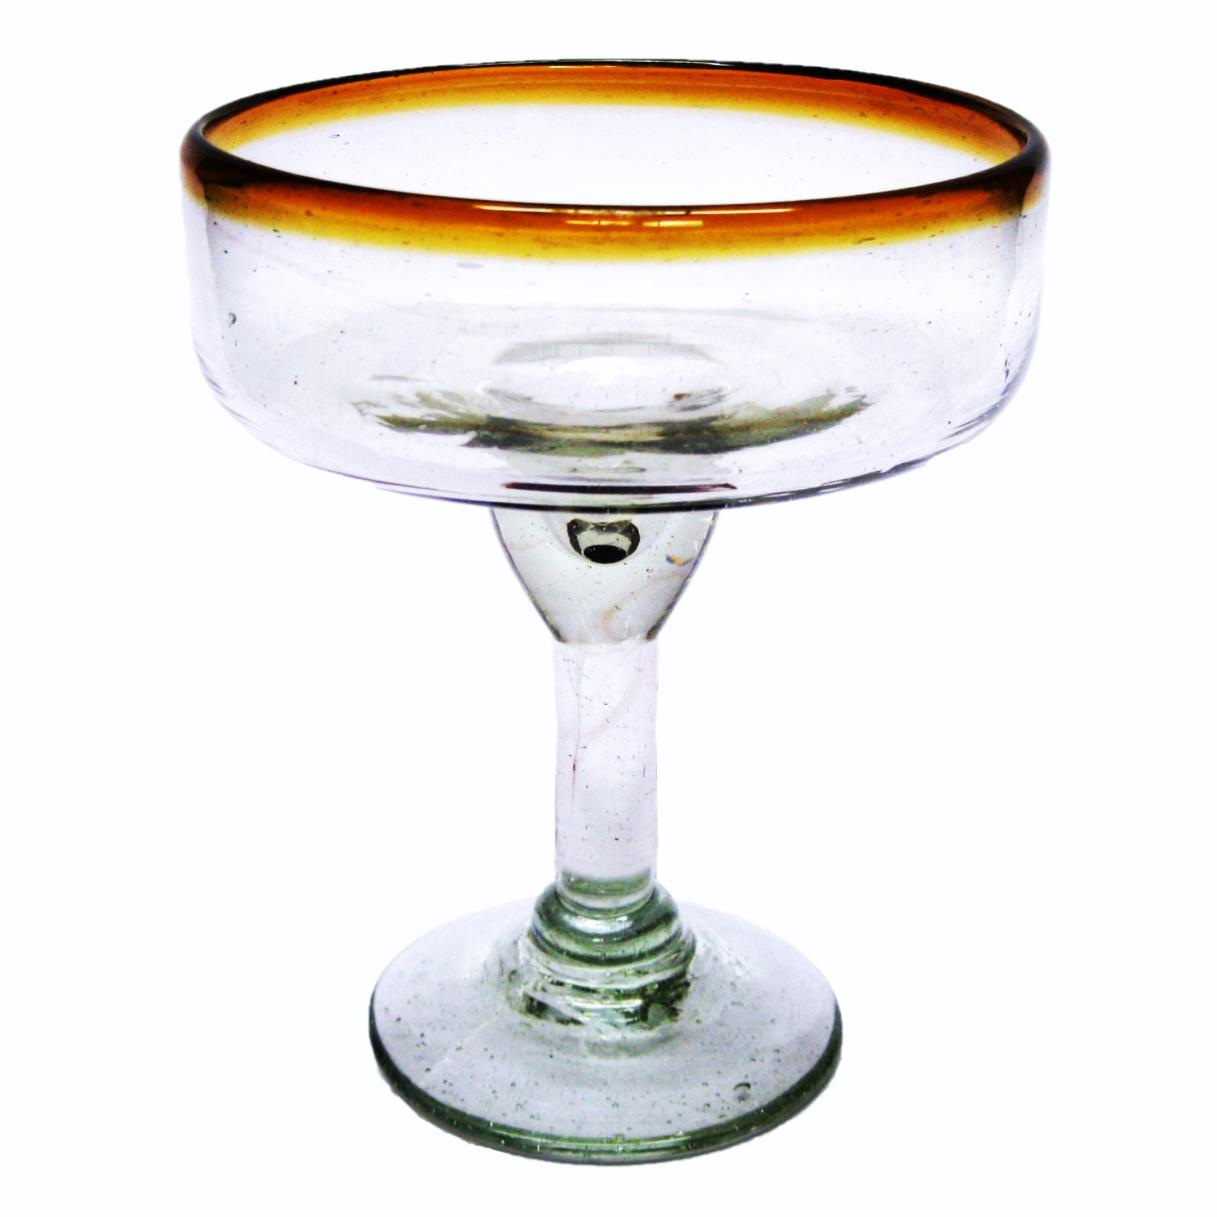 Wholesale Amber Rim Glassware / Amber Rim 14 oz Large Margarita Glasses  / For the margarita lover, these enjoyable large sized margarita glasses feature a cheerful amber color rim.